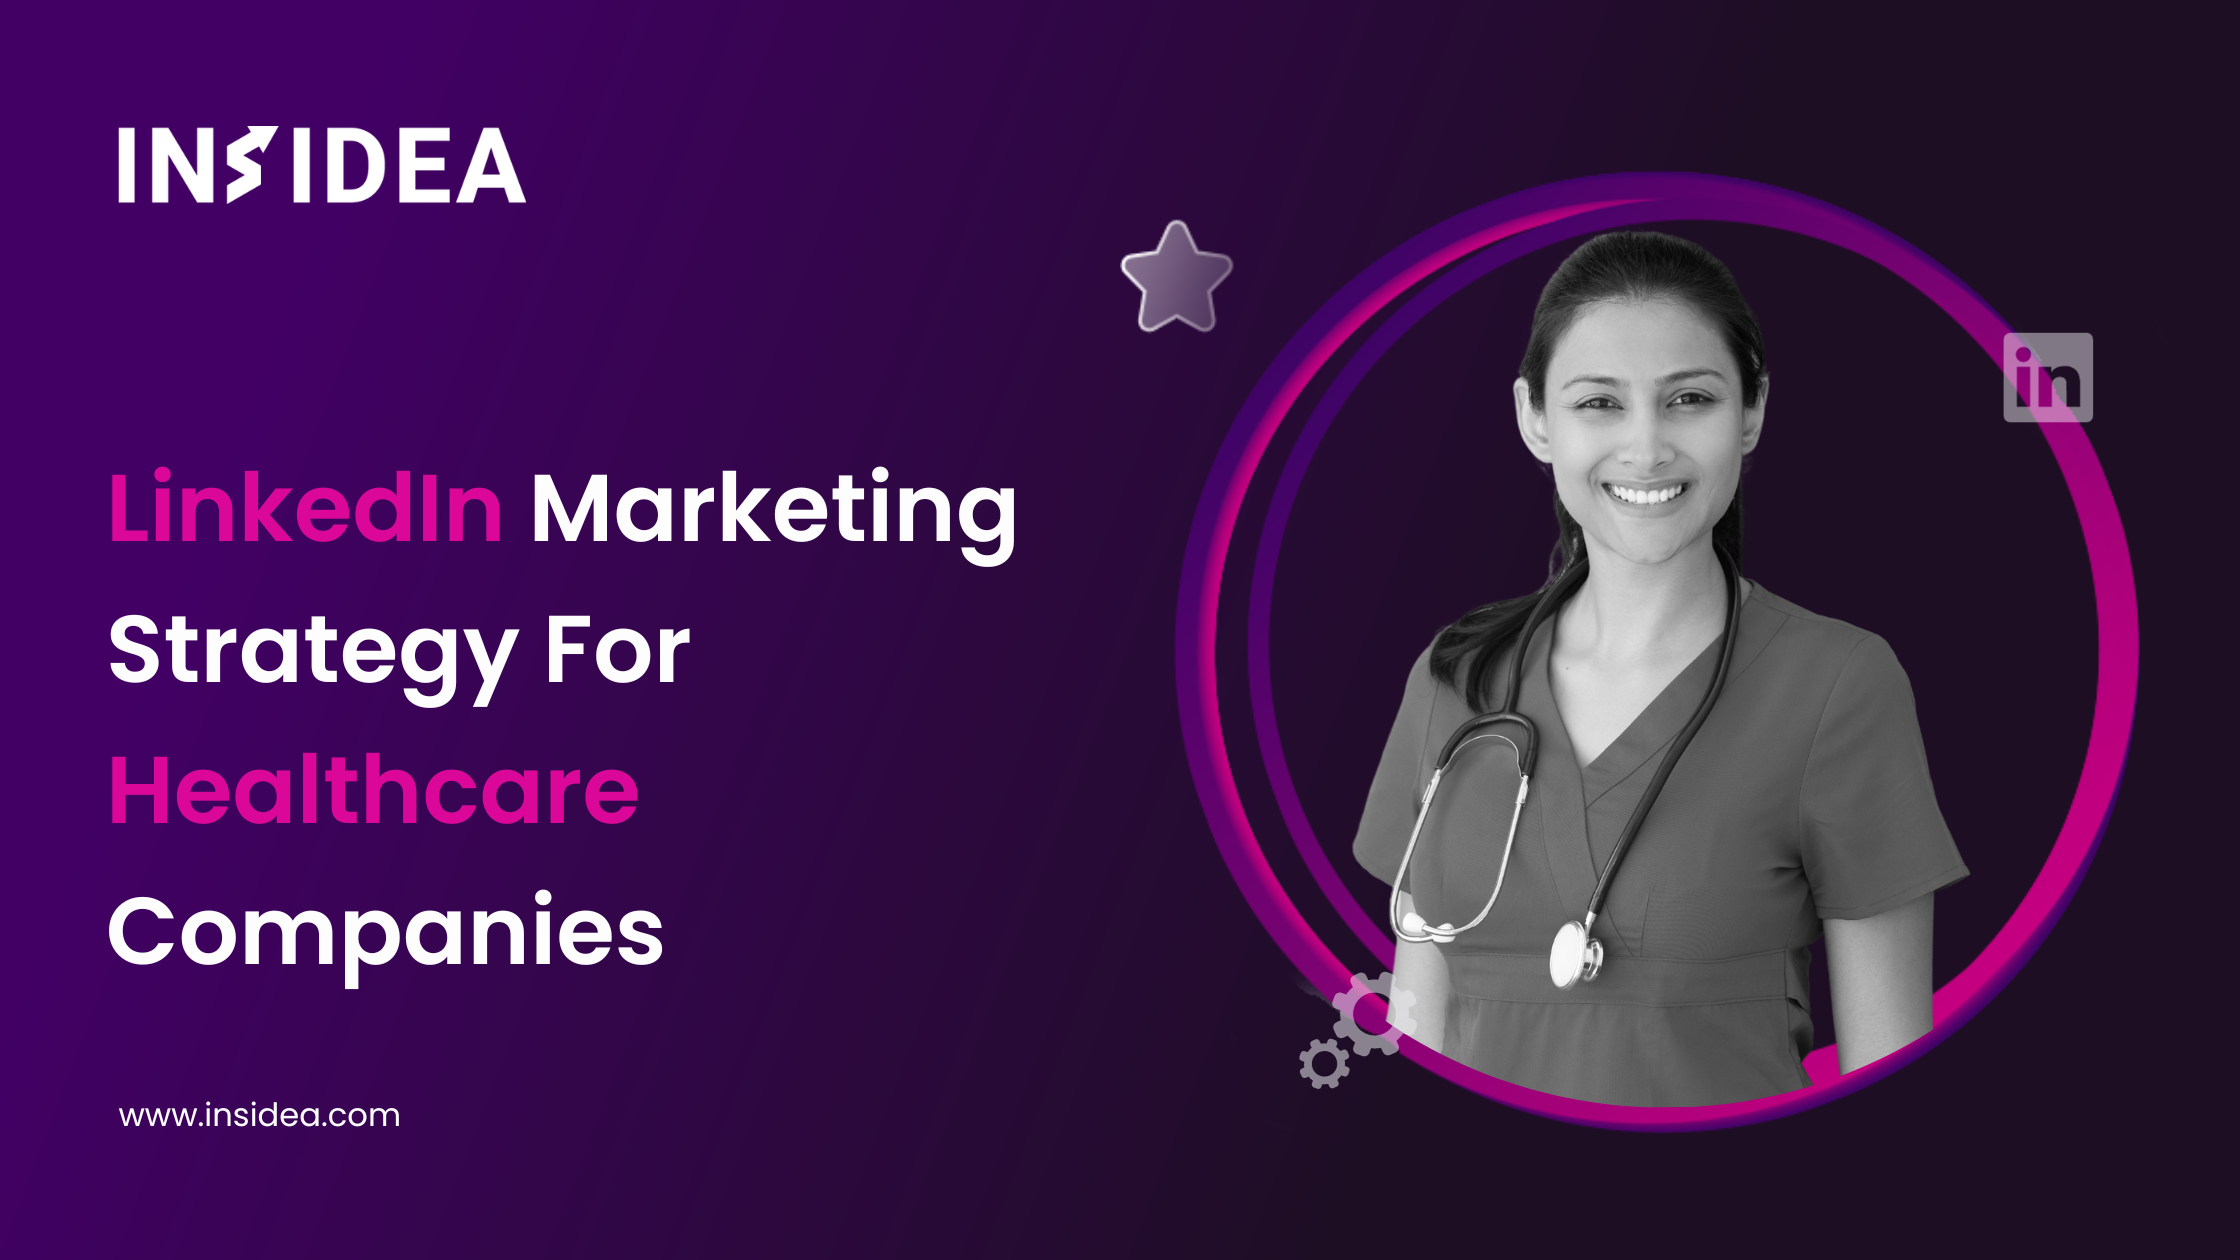 _LinkedIn Marketing Strategy for Healthcare Companies